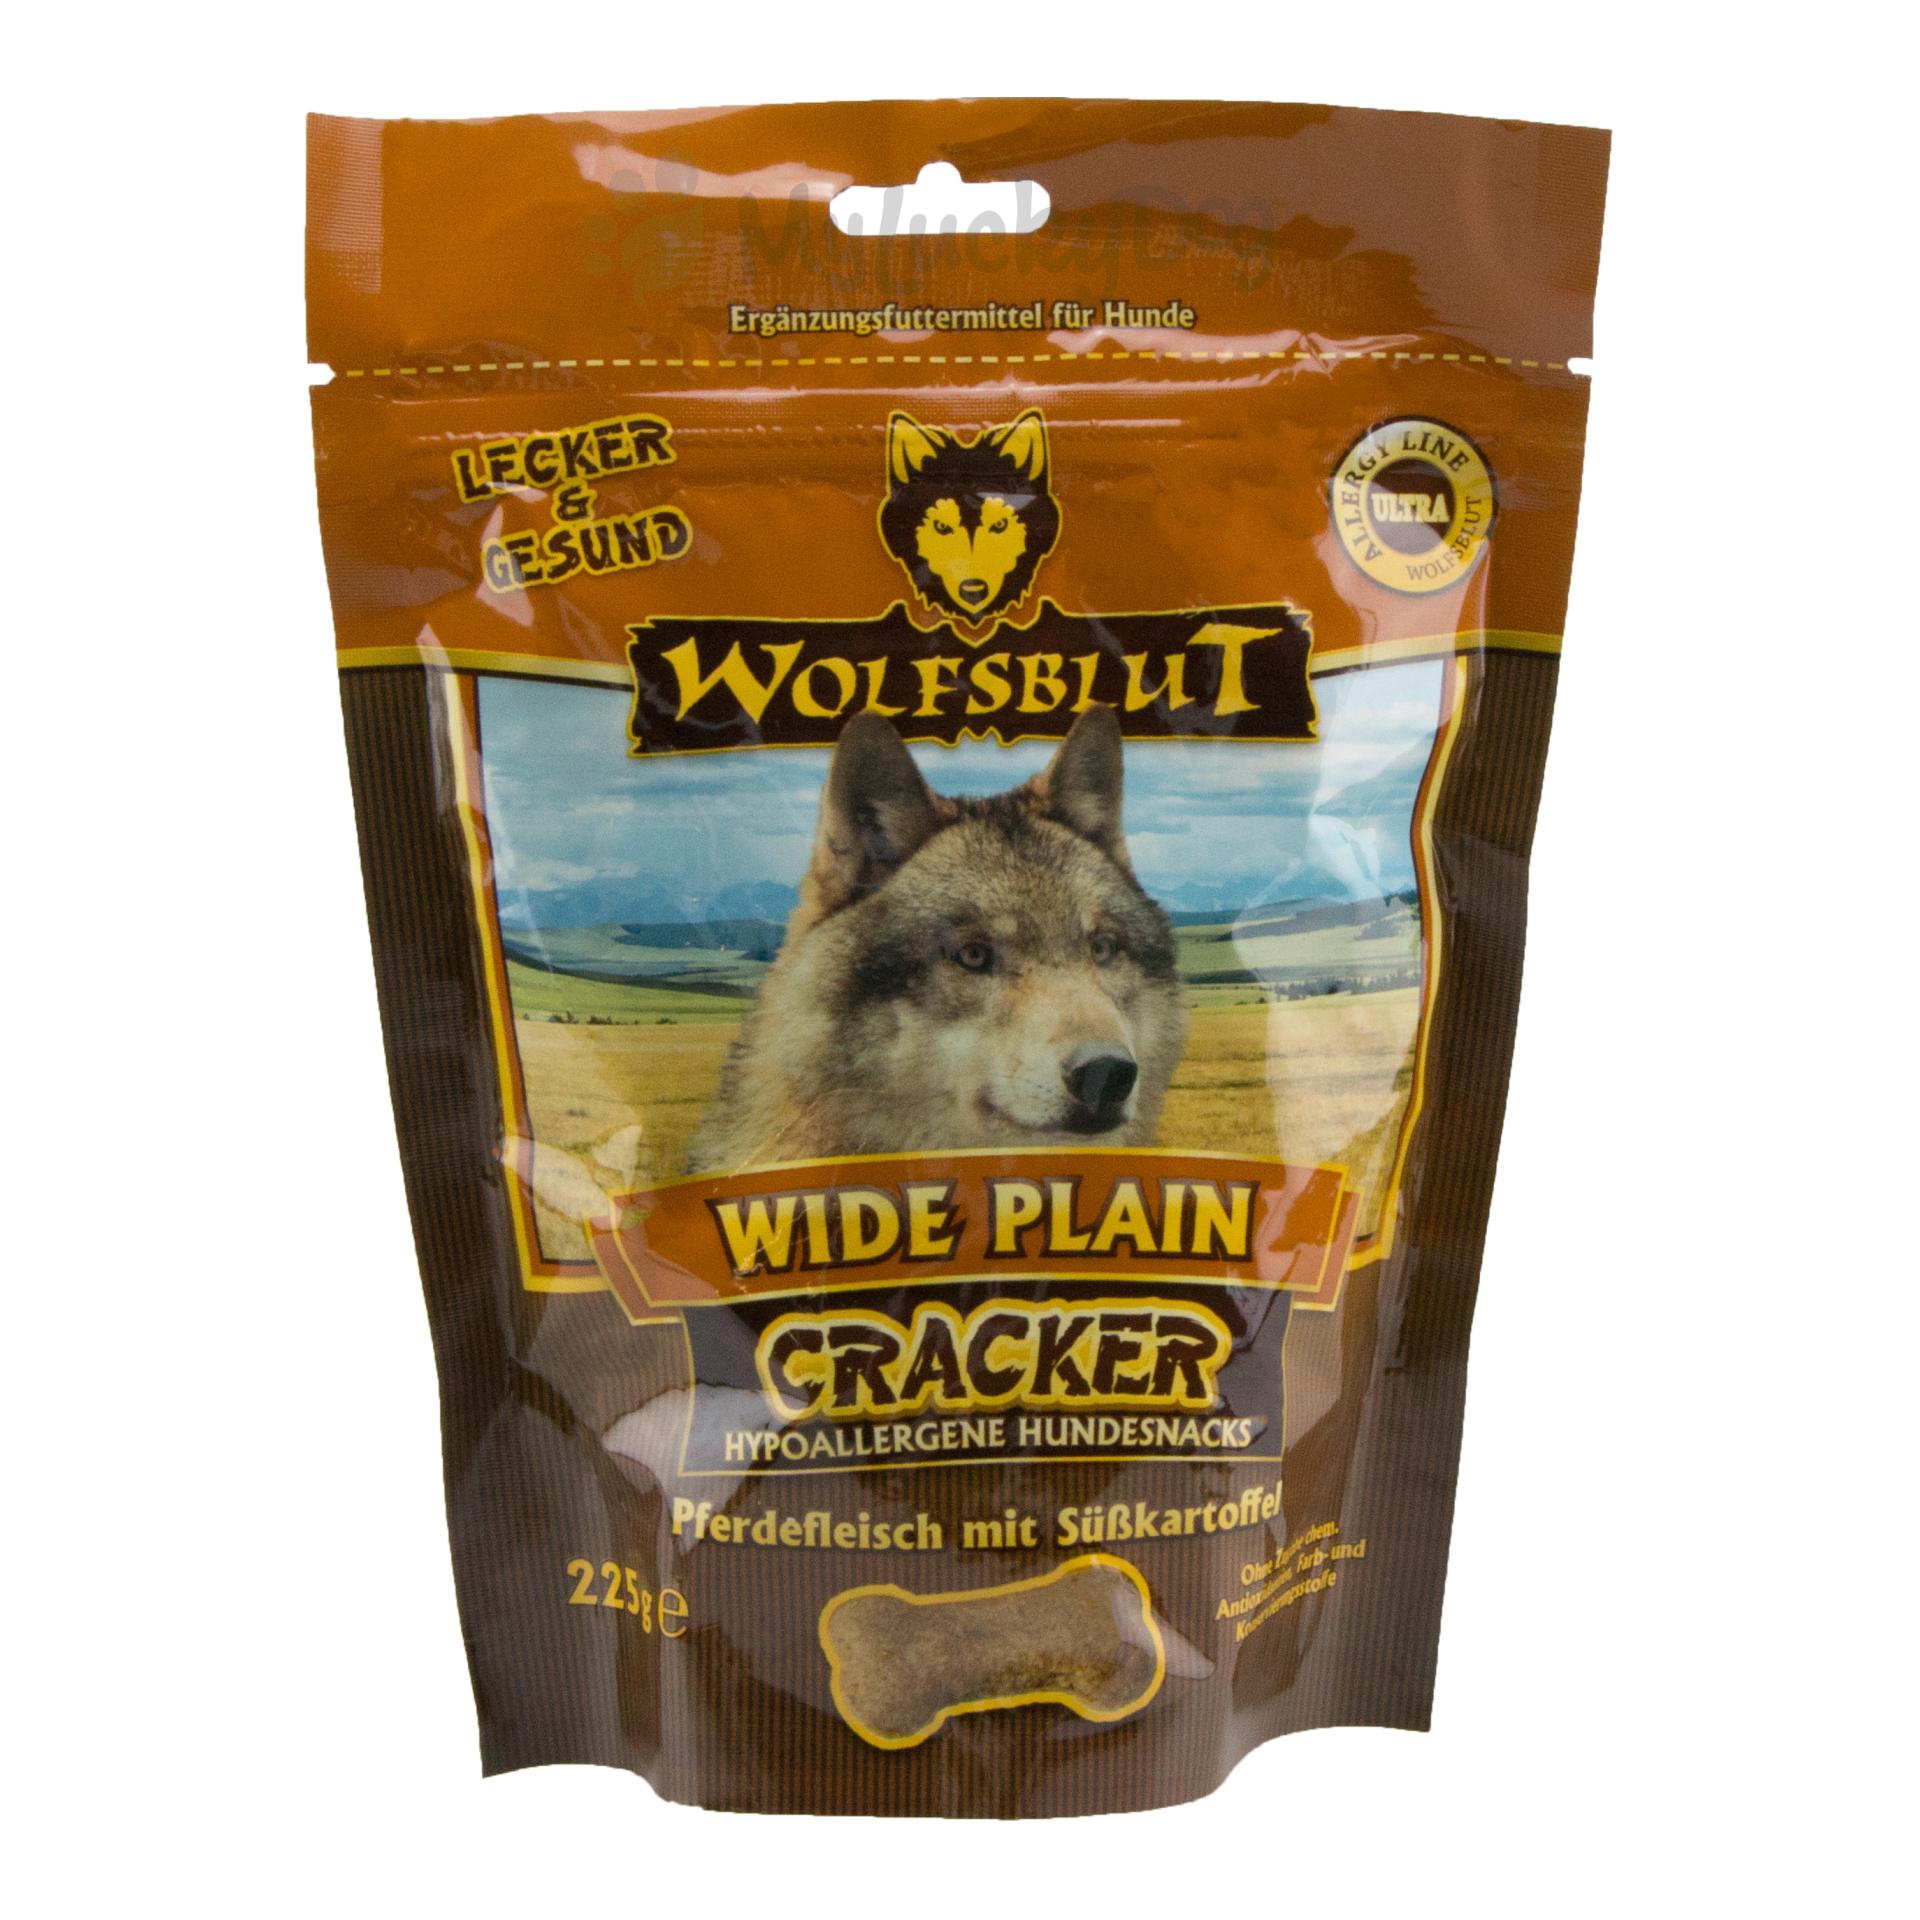 Image of Wolfsblut Cracker Hundesnacks Wide Plain Pferd & Süßkartoffel 225 g bei Hauptner.ch